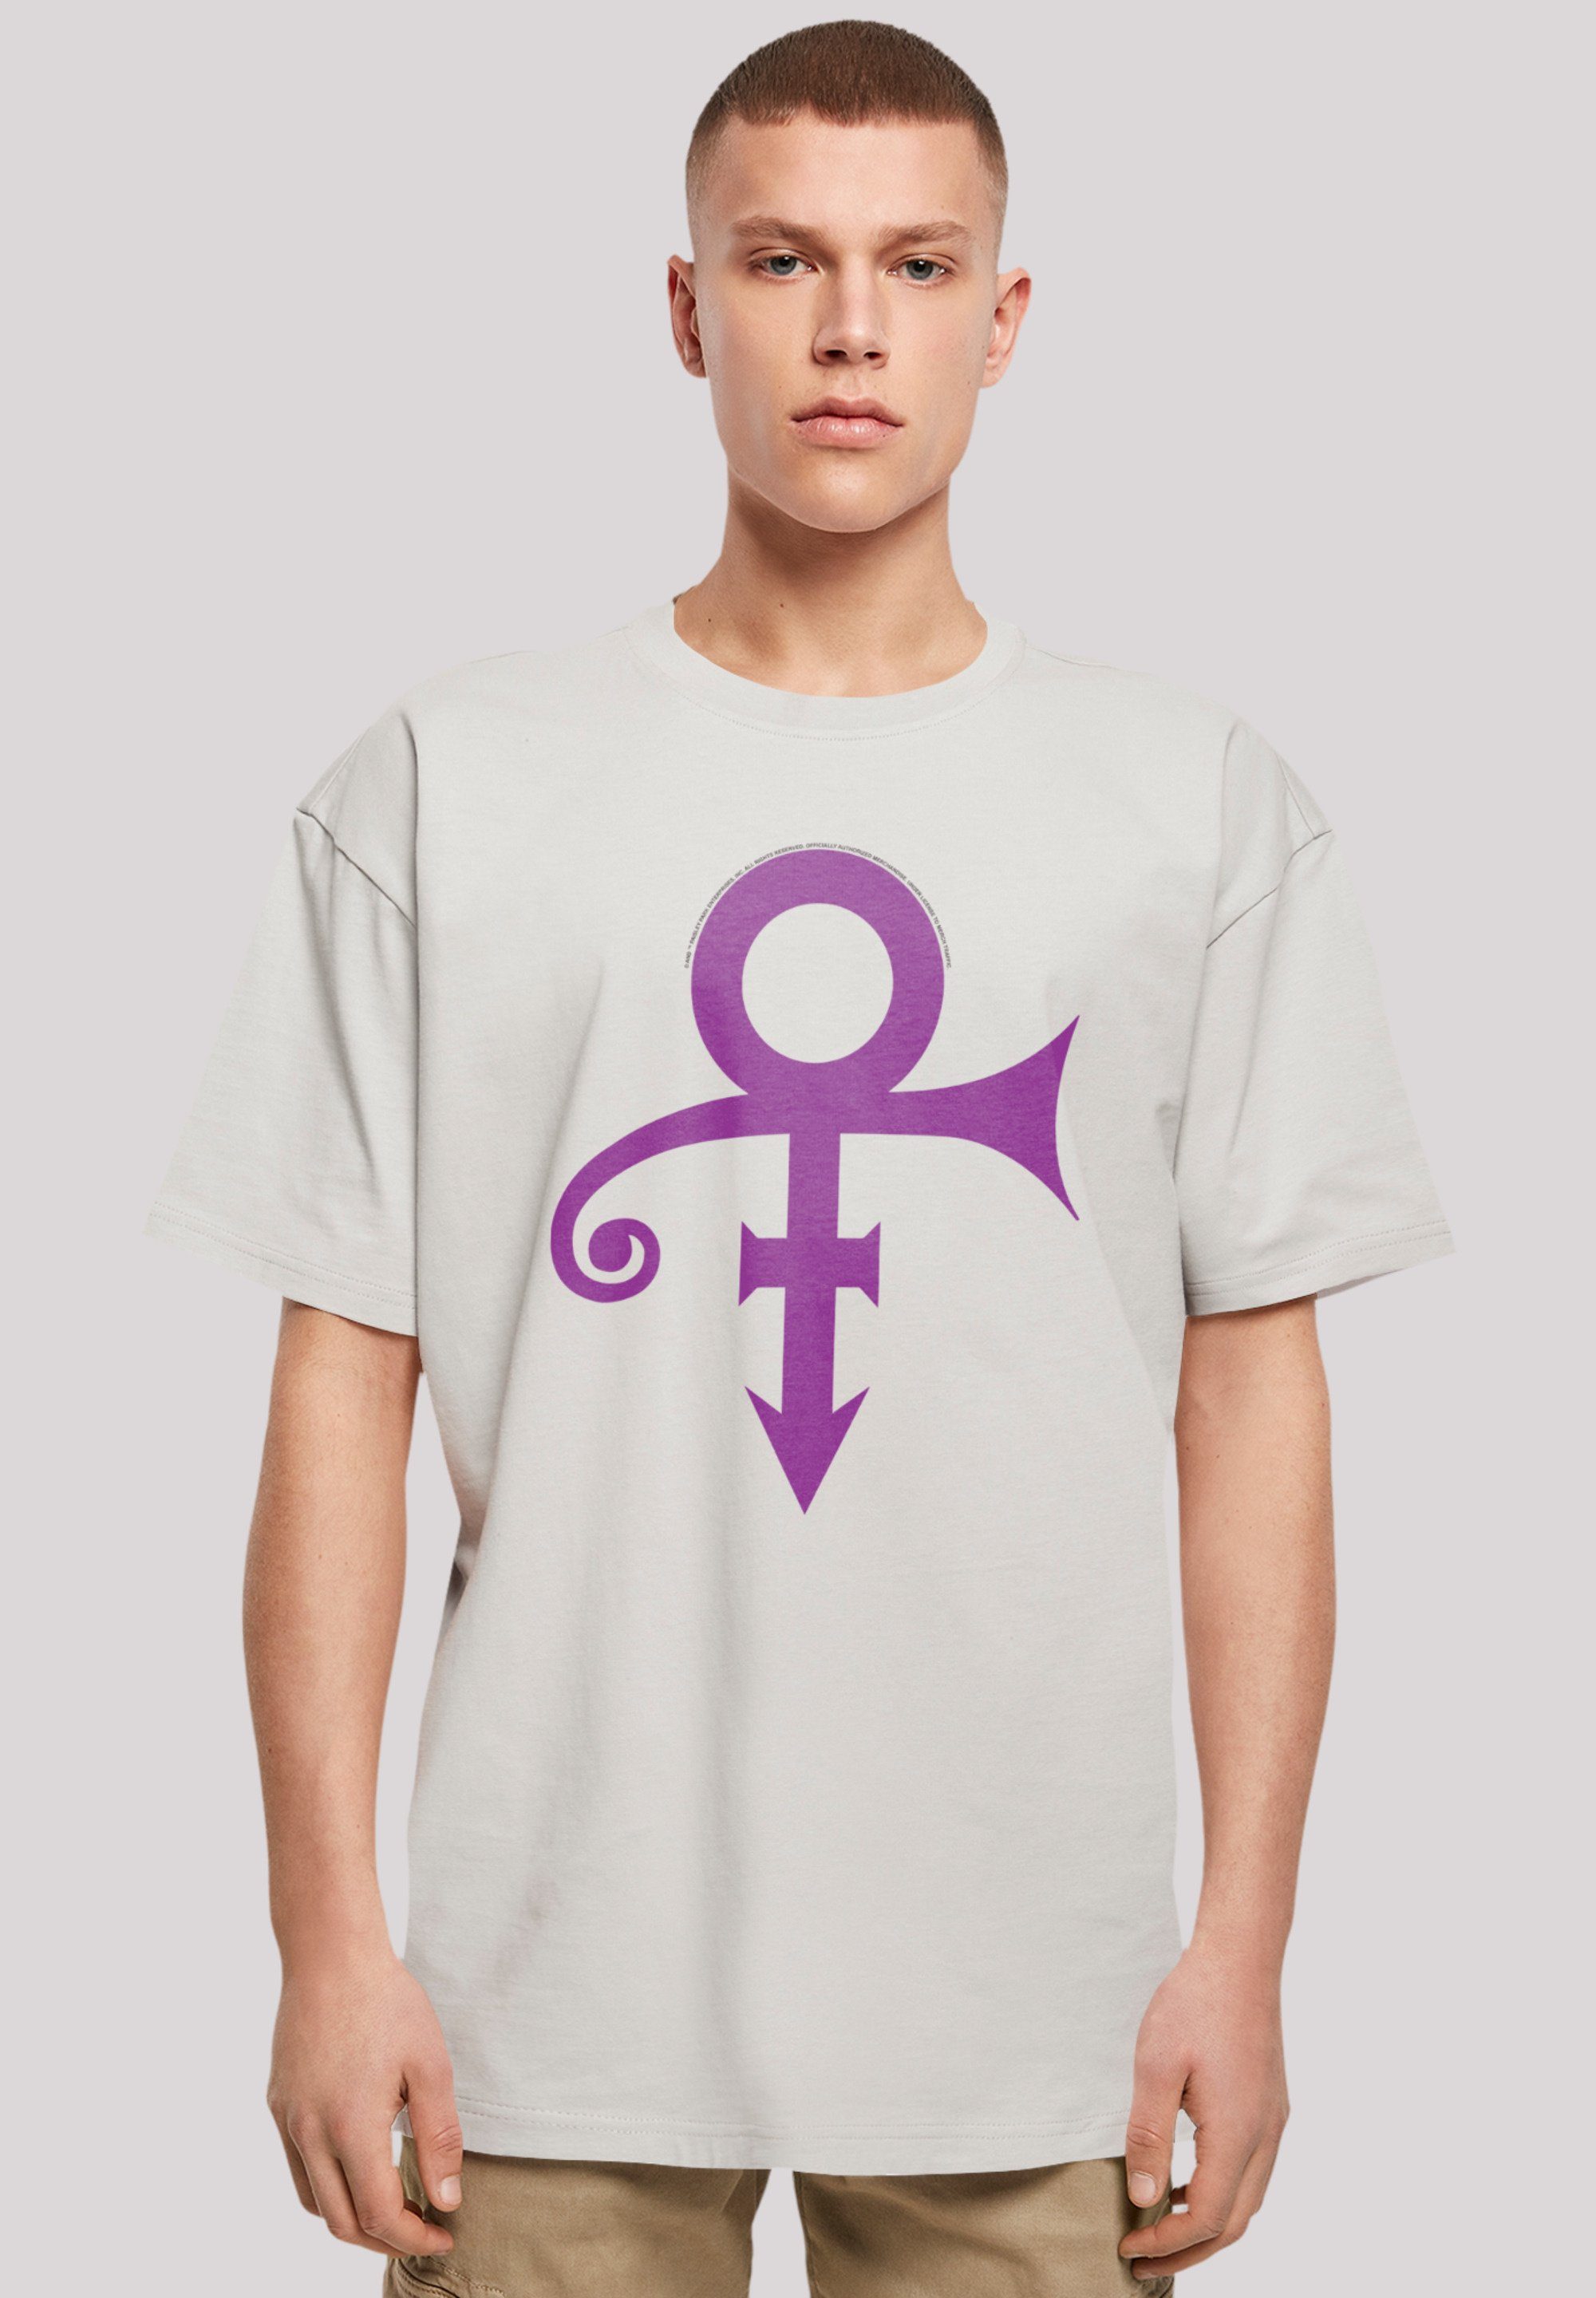 T-Shirt Rock-Musik, Band Premium Qualität, Album Prince Logo F4NT4STIC Musik